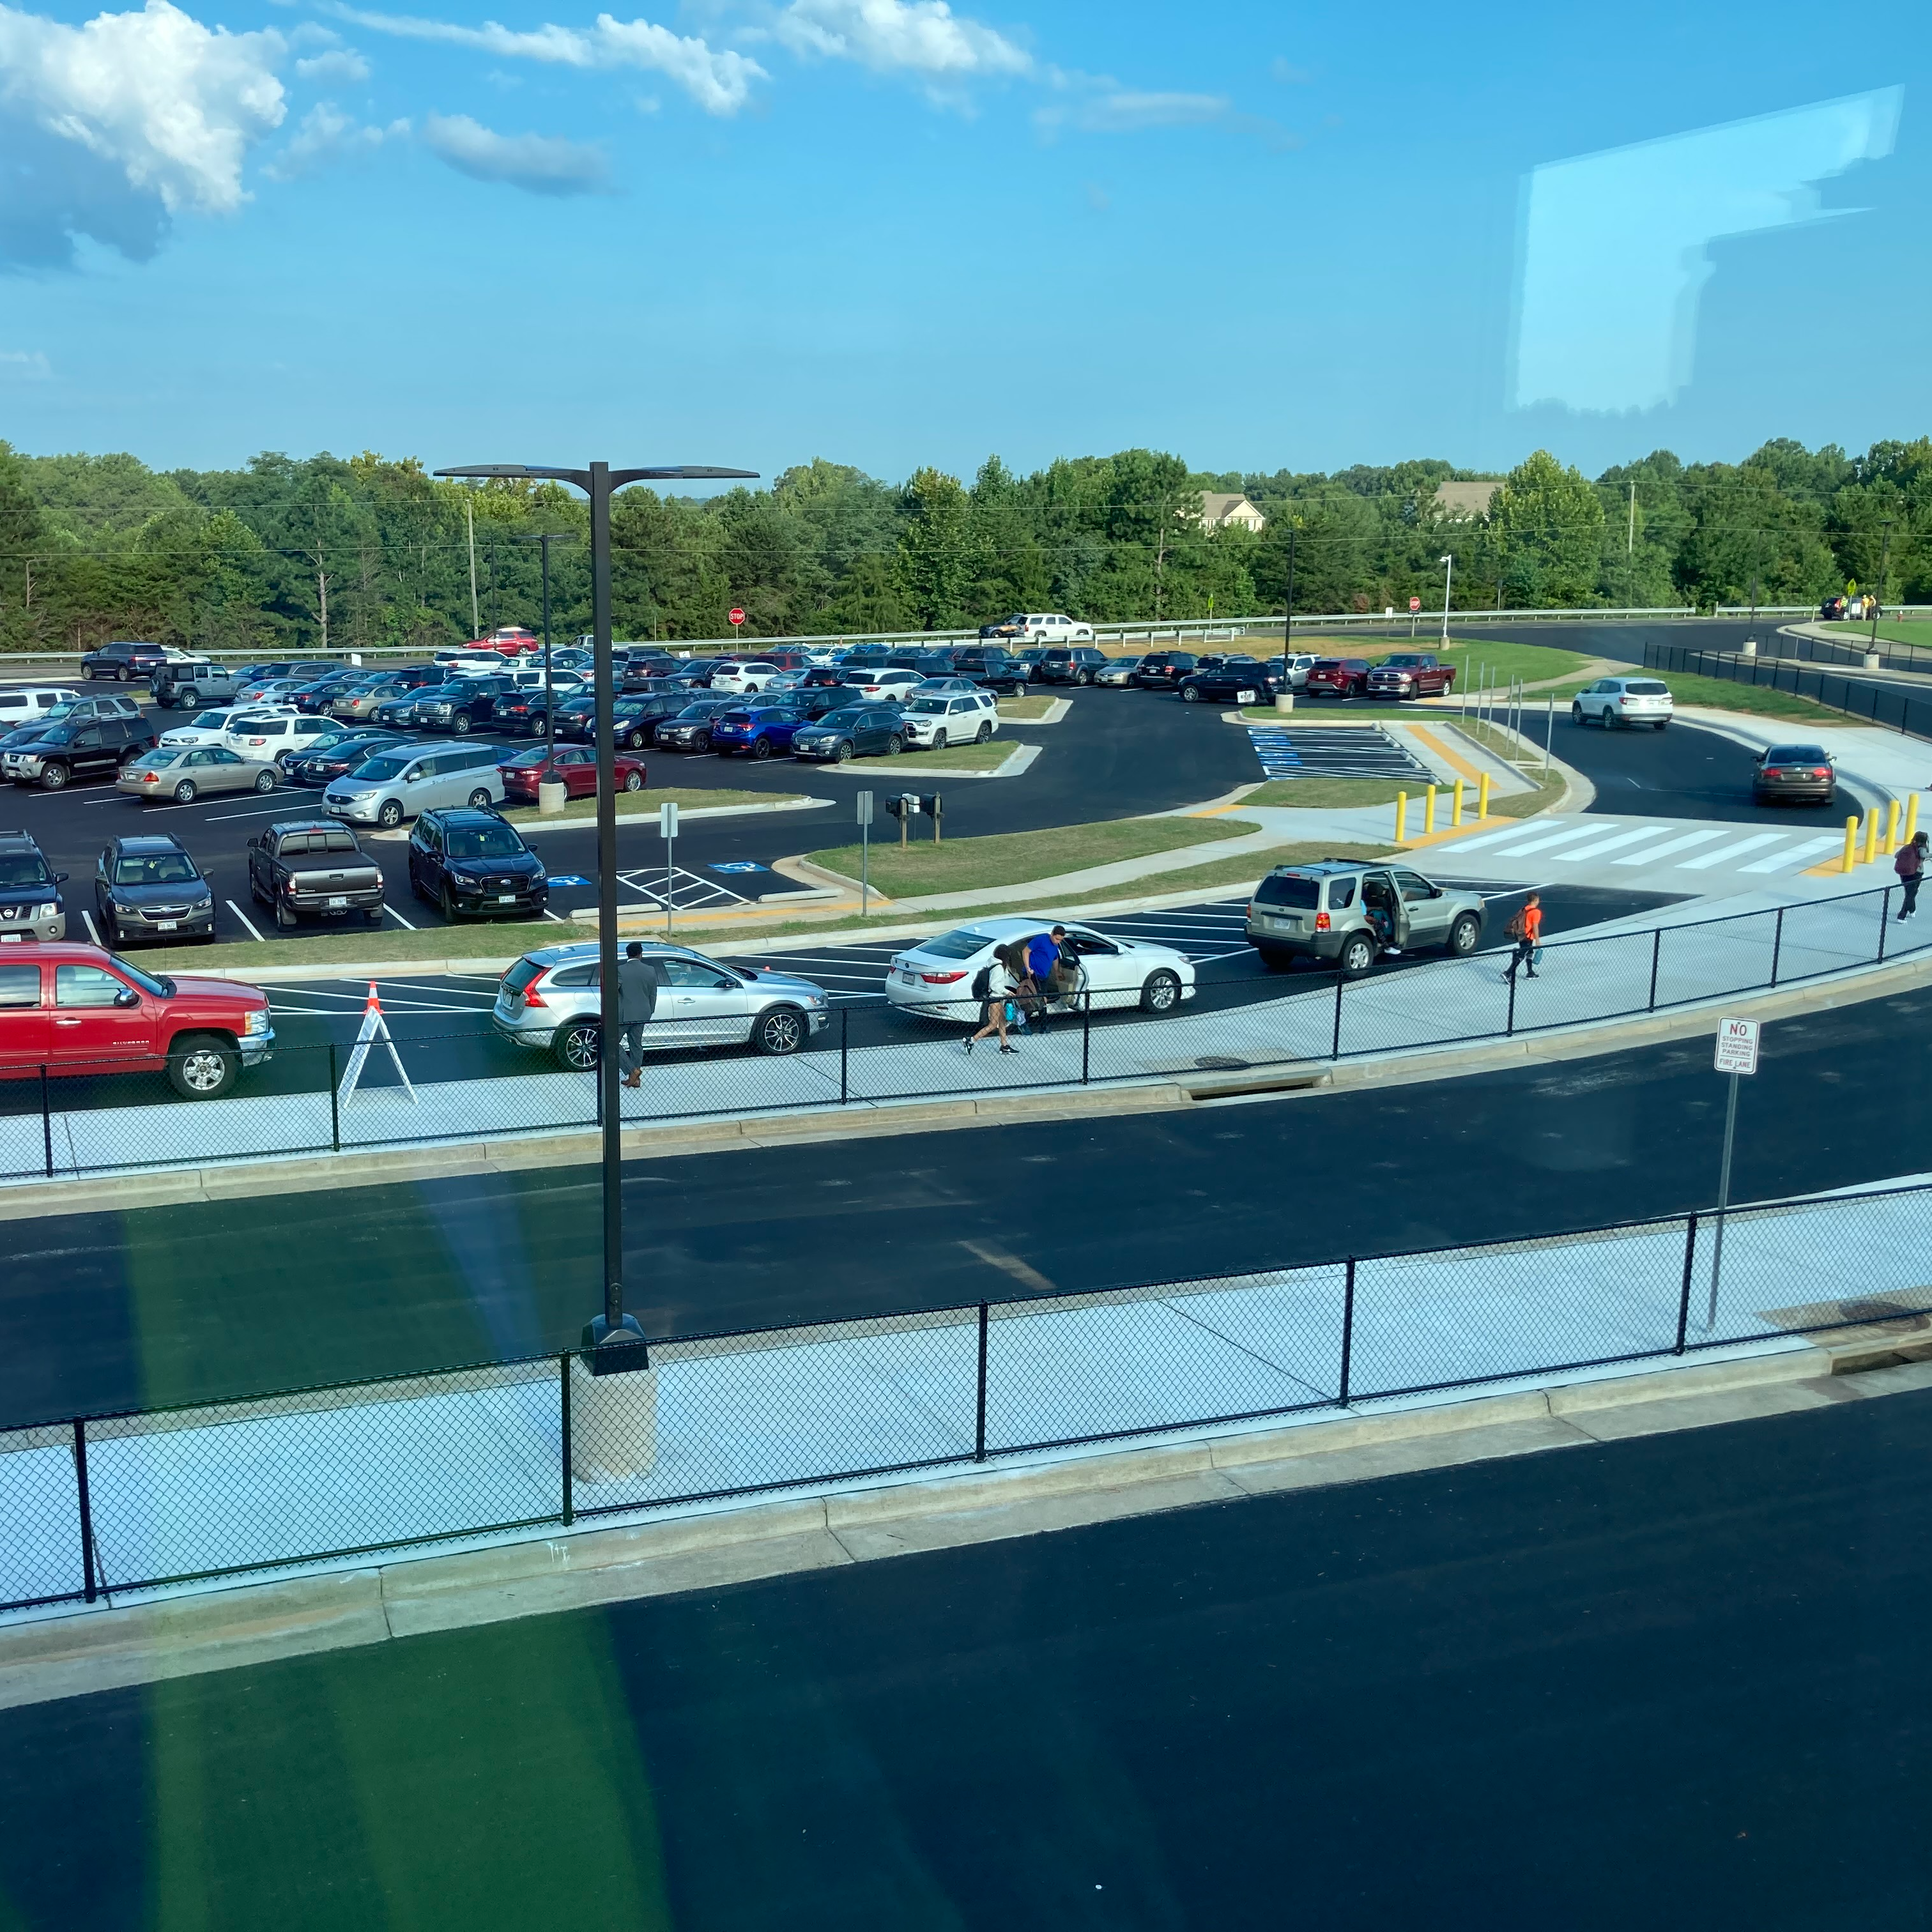 GMS/GHS Parking lot - parent vehicles merging into drop-off area